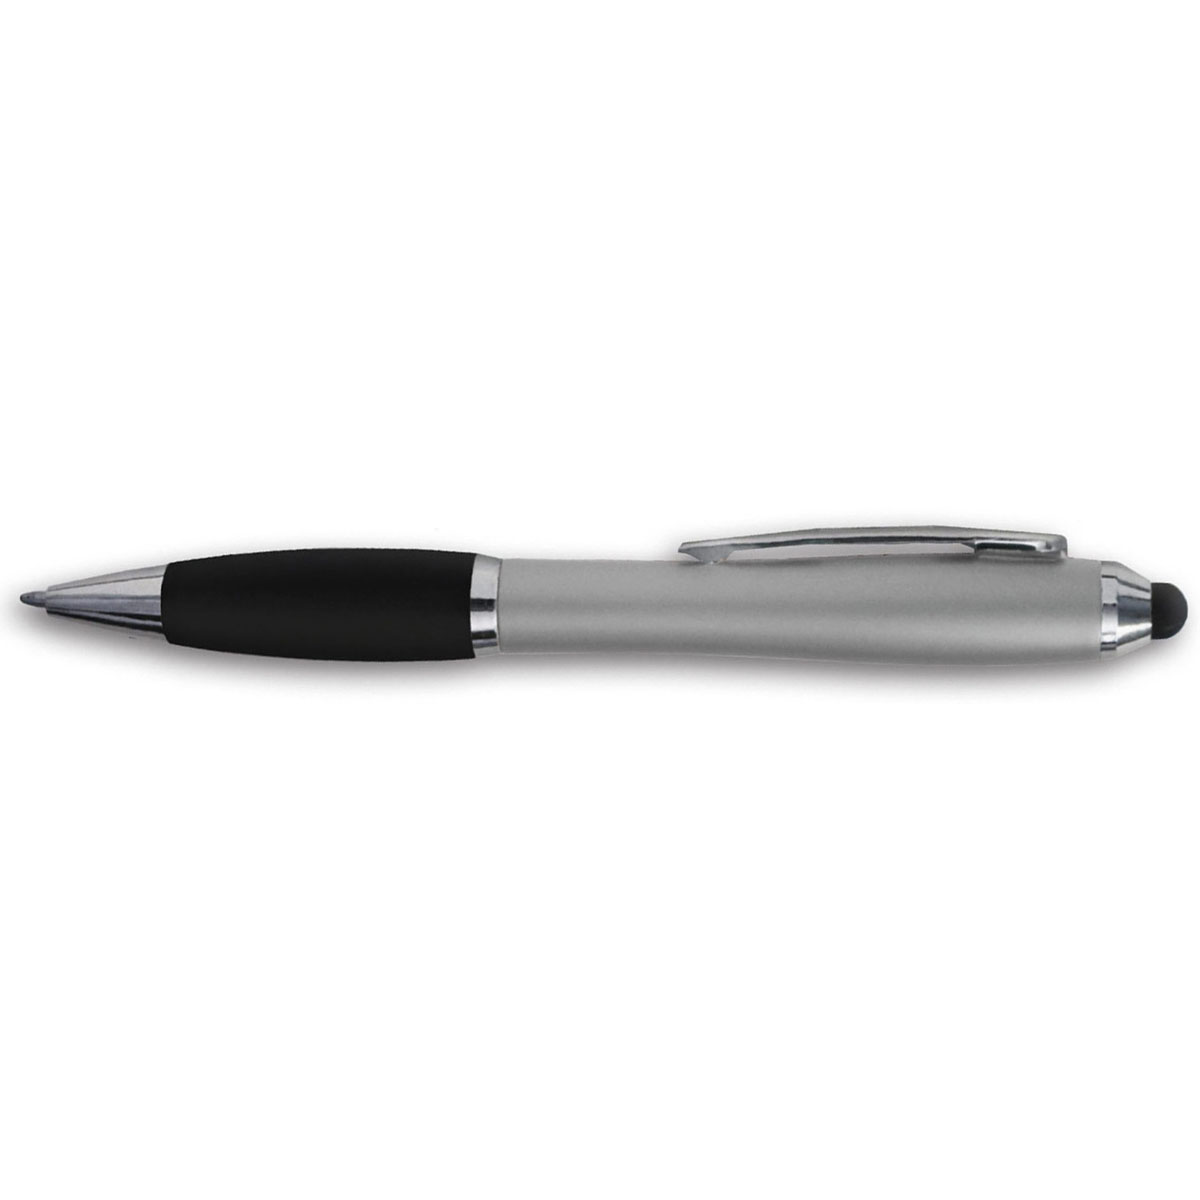 Silver w/black grip iBasset I Stylus Pen (Silver Body)